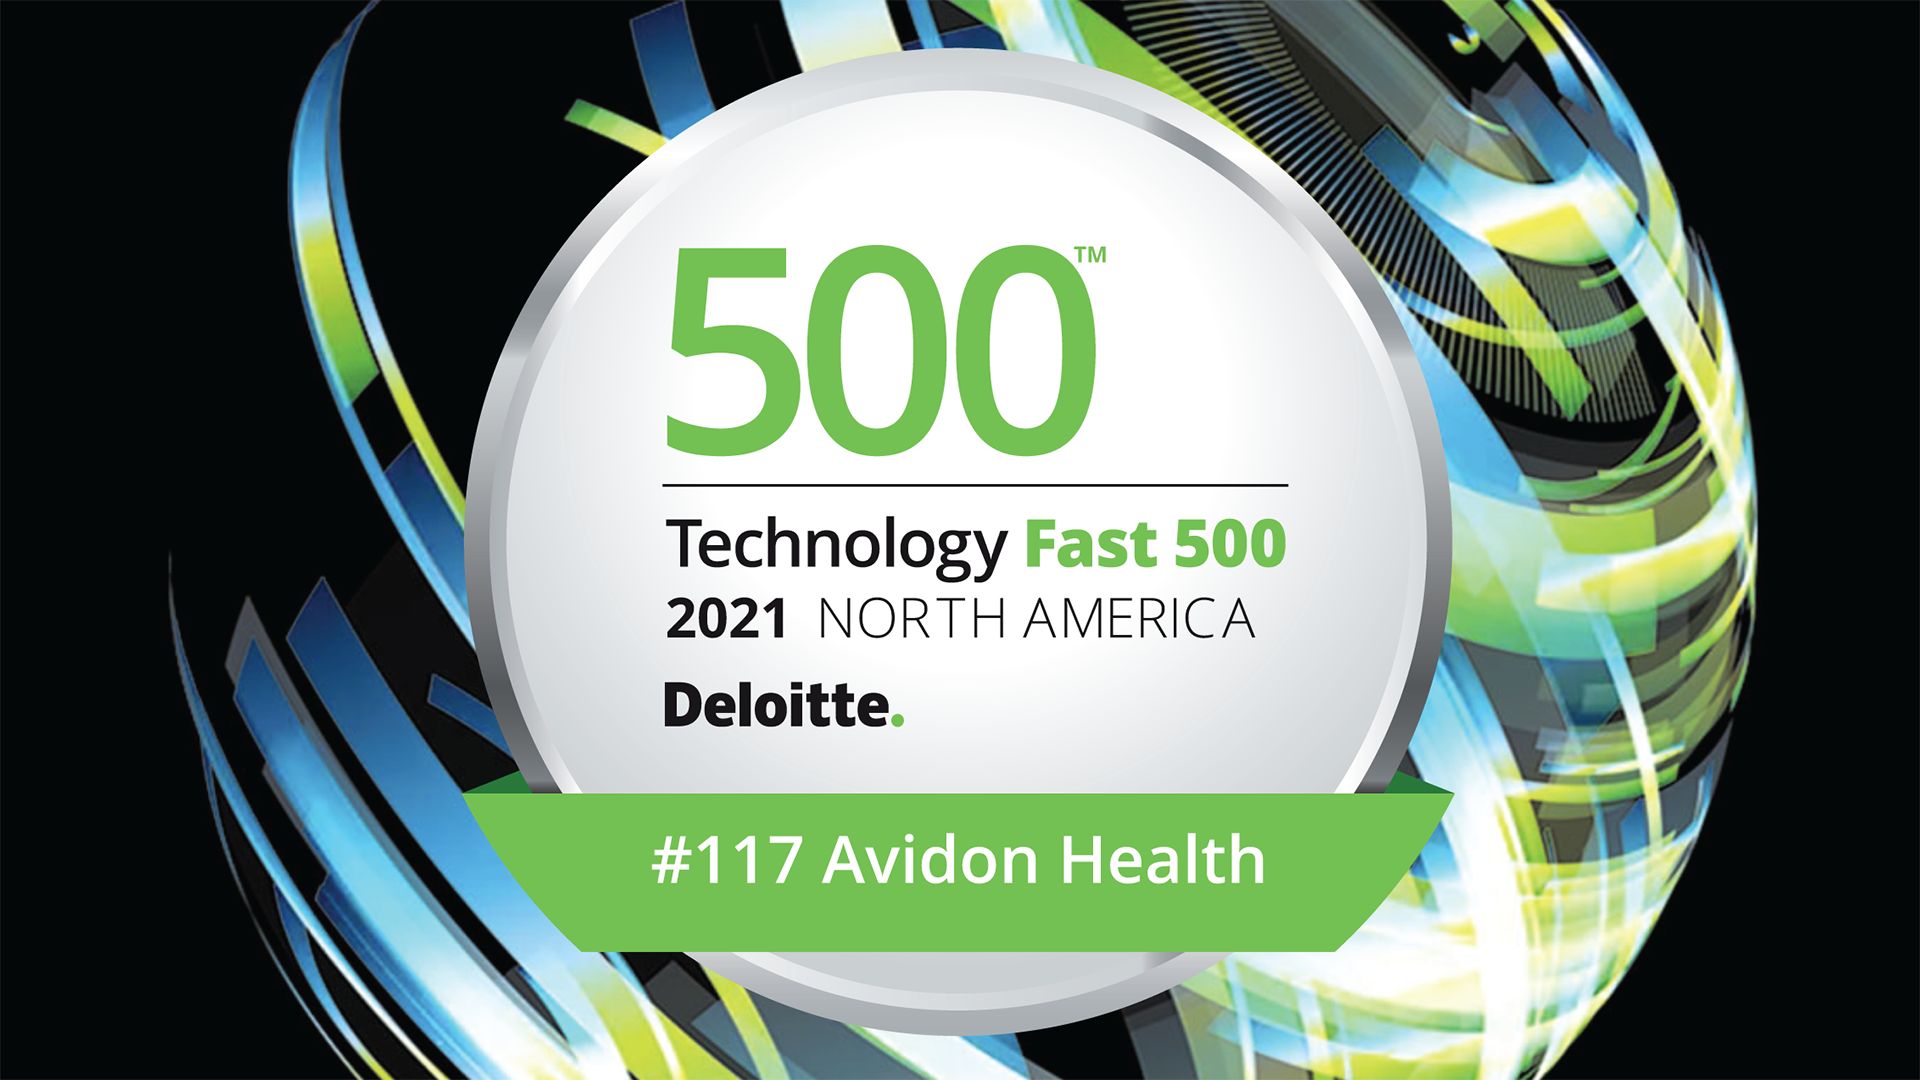 Avidon Health ranked the 117th FastestGrowing Company on Deloitte’s